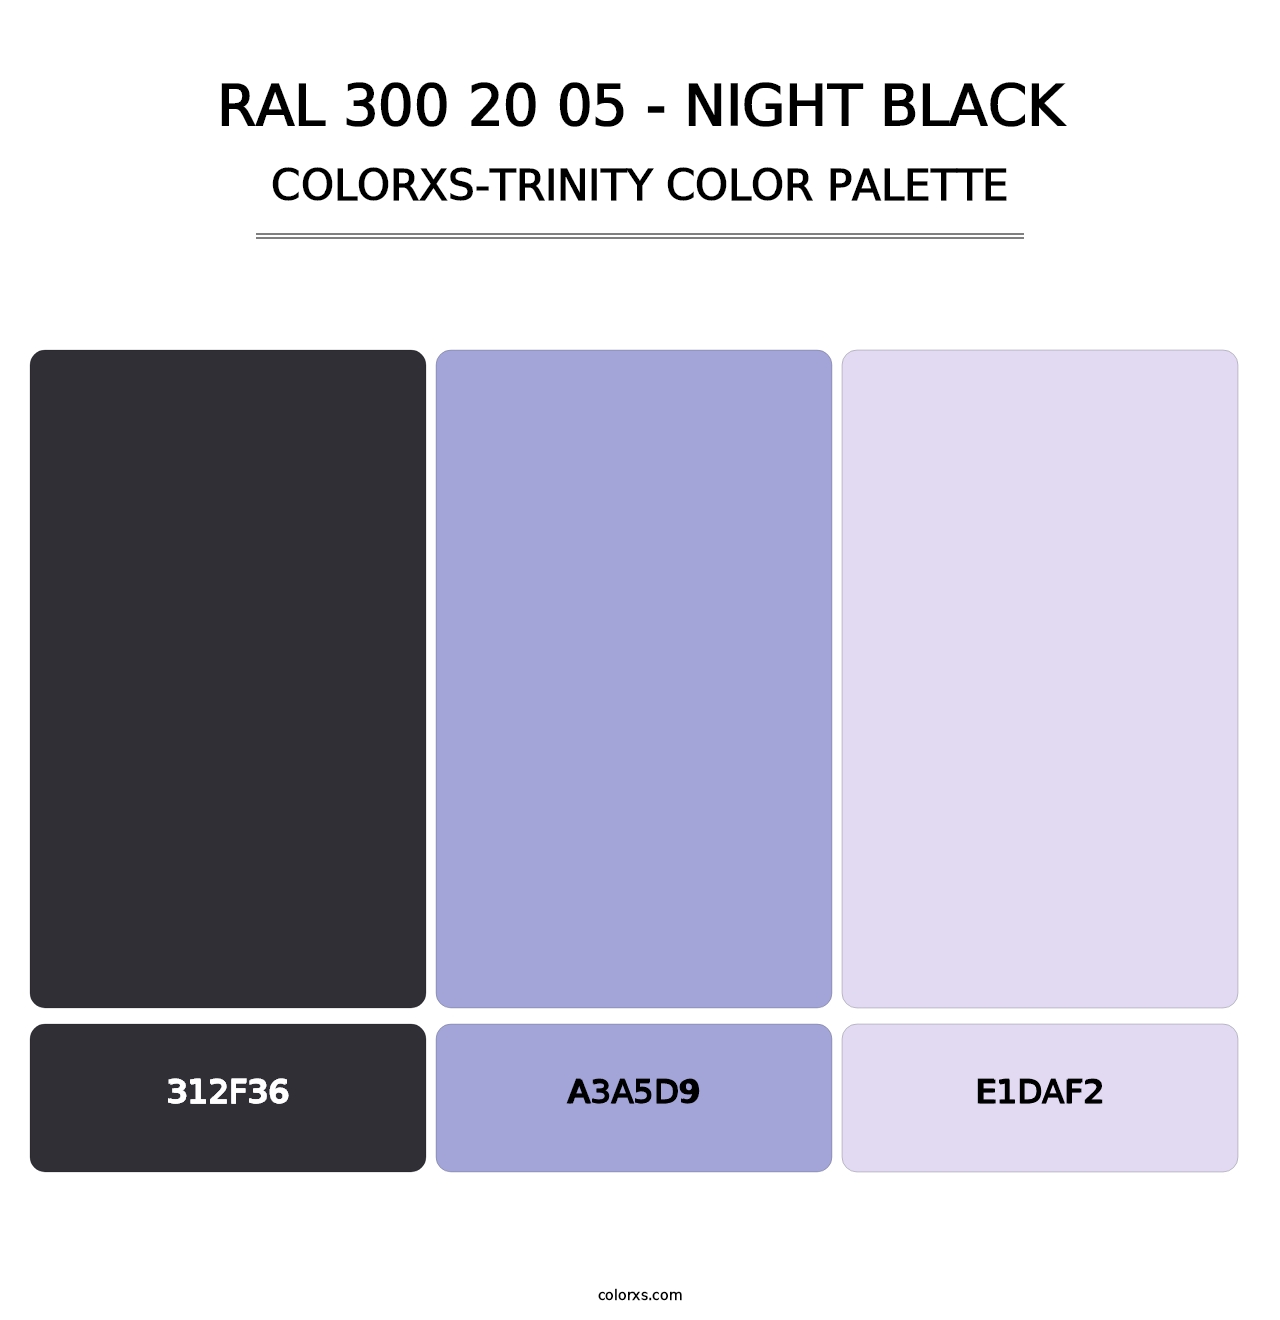 RAL 300 20 05 - Night Black - Colorxs Trinity Palette